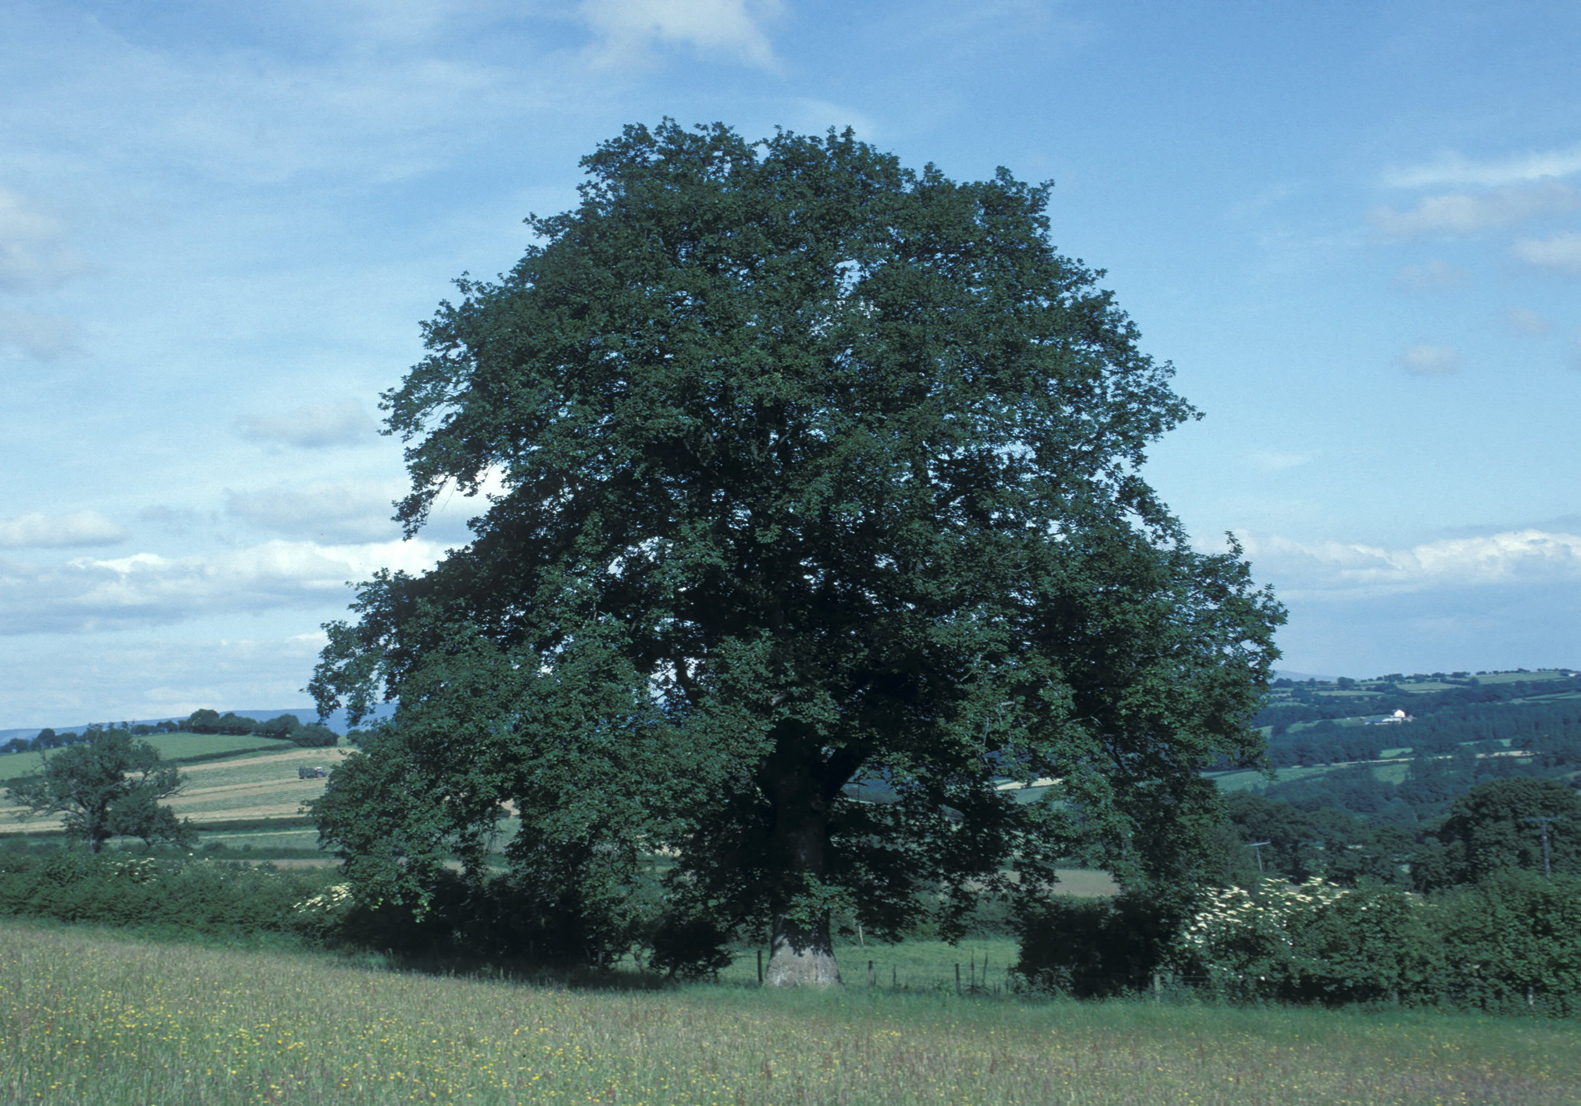 Sessile oak - Quercus petraea. Mature tree in Brecon, Wales.